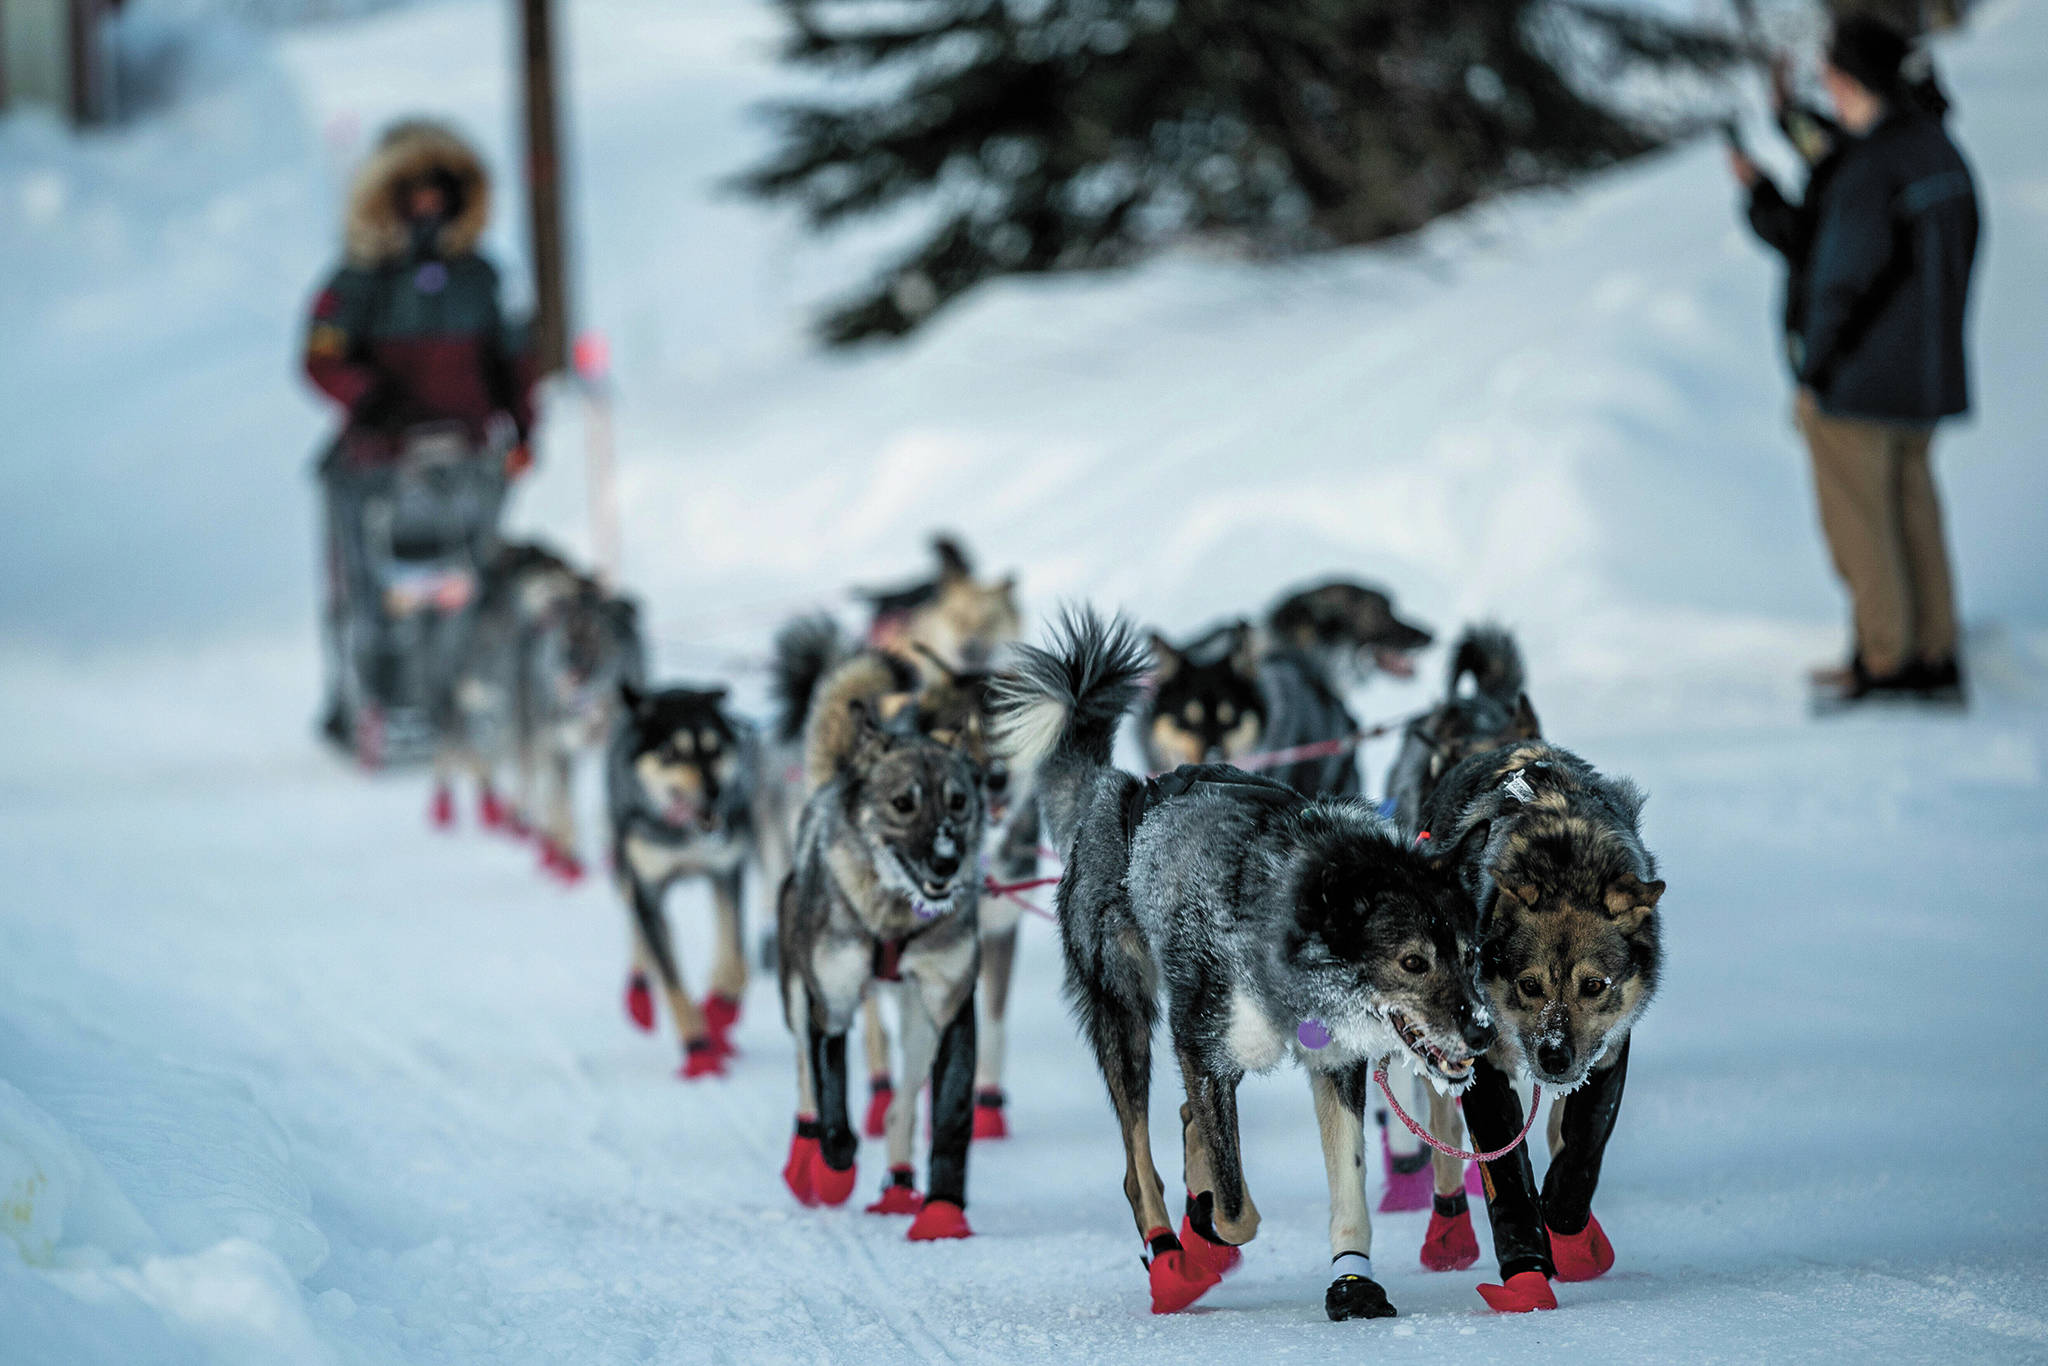 Norwegian musher wins Alaska’s Iditarod sled dog race